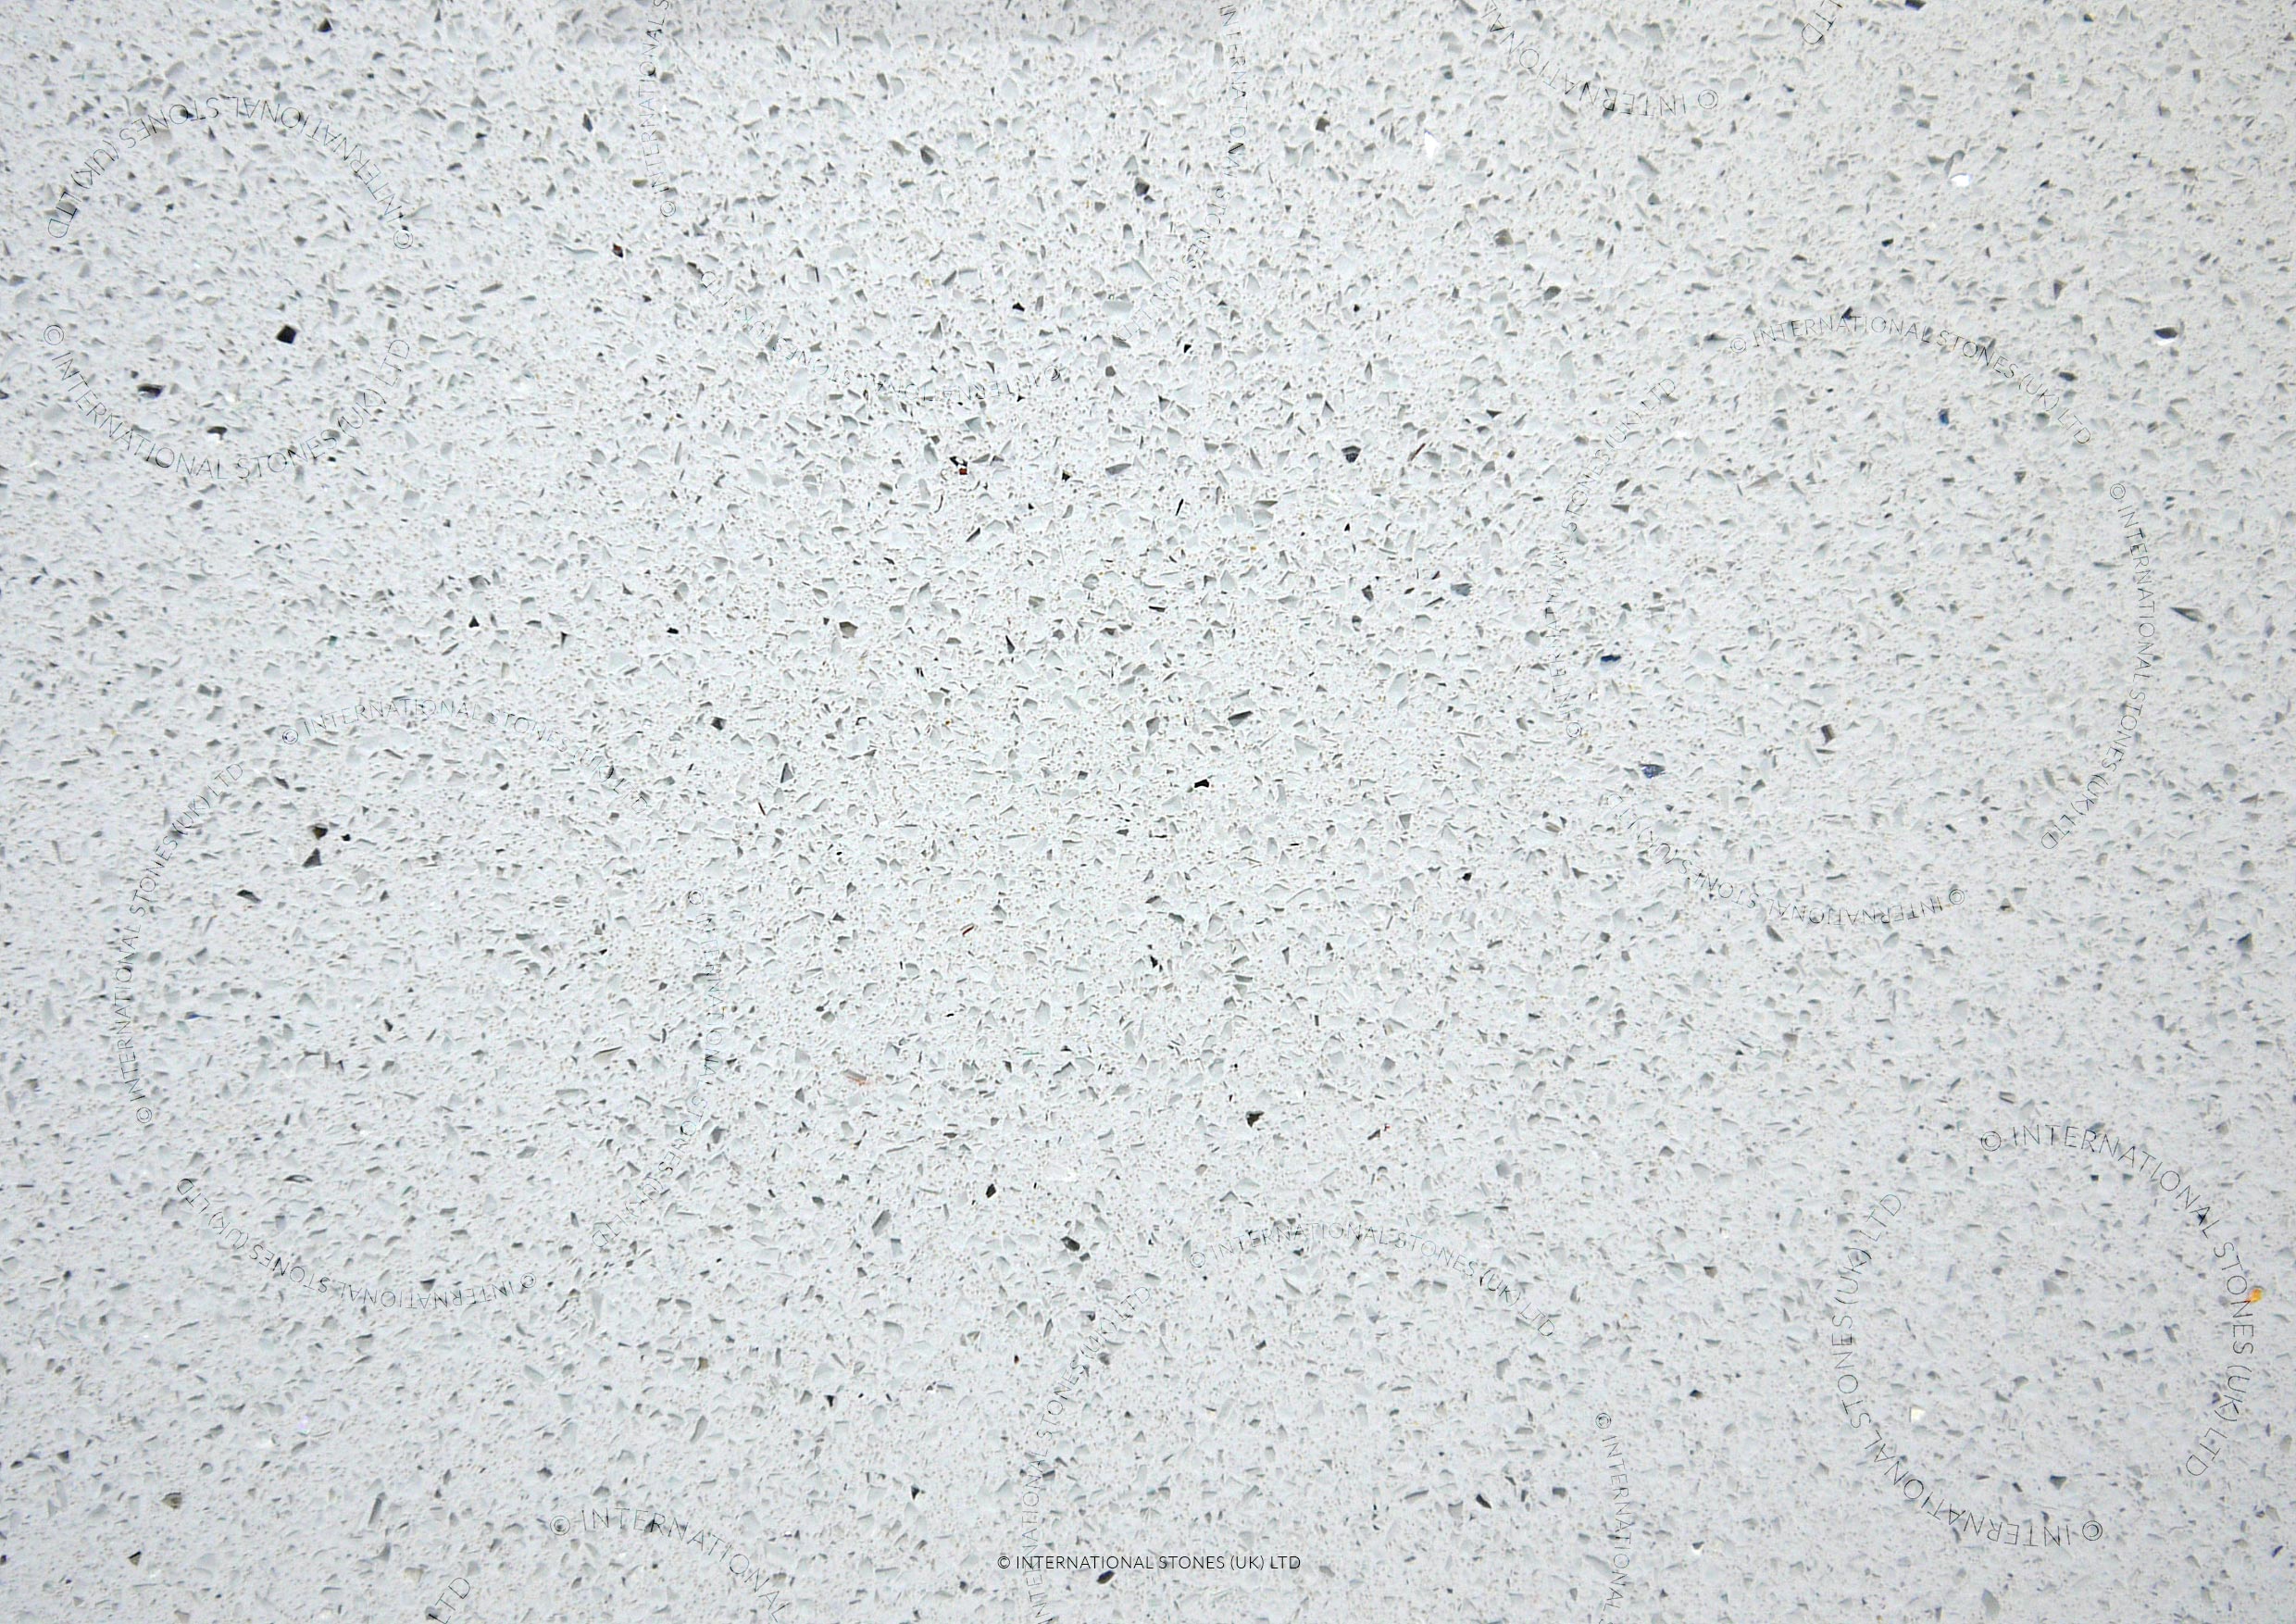 International Stone IQ Blanco Stellar - Cambridgeshire - Northstowe